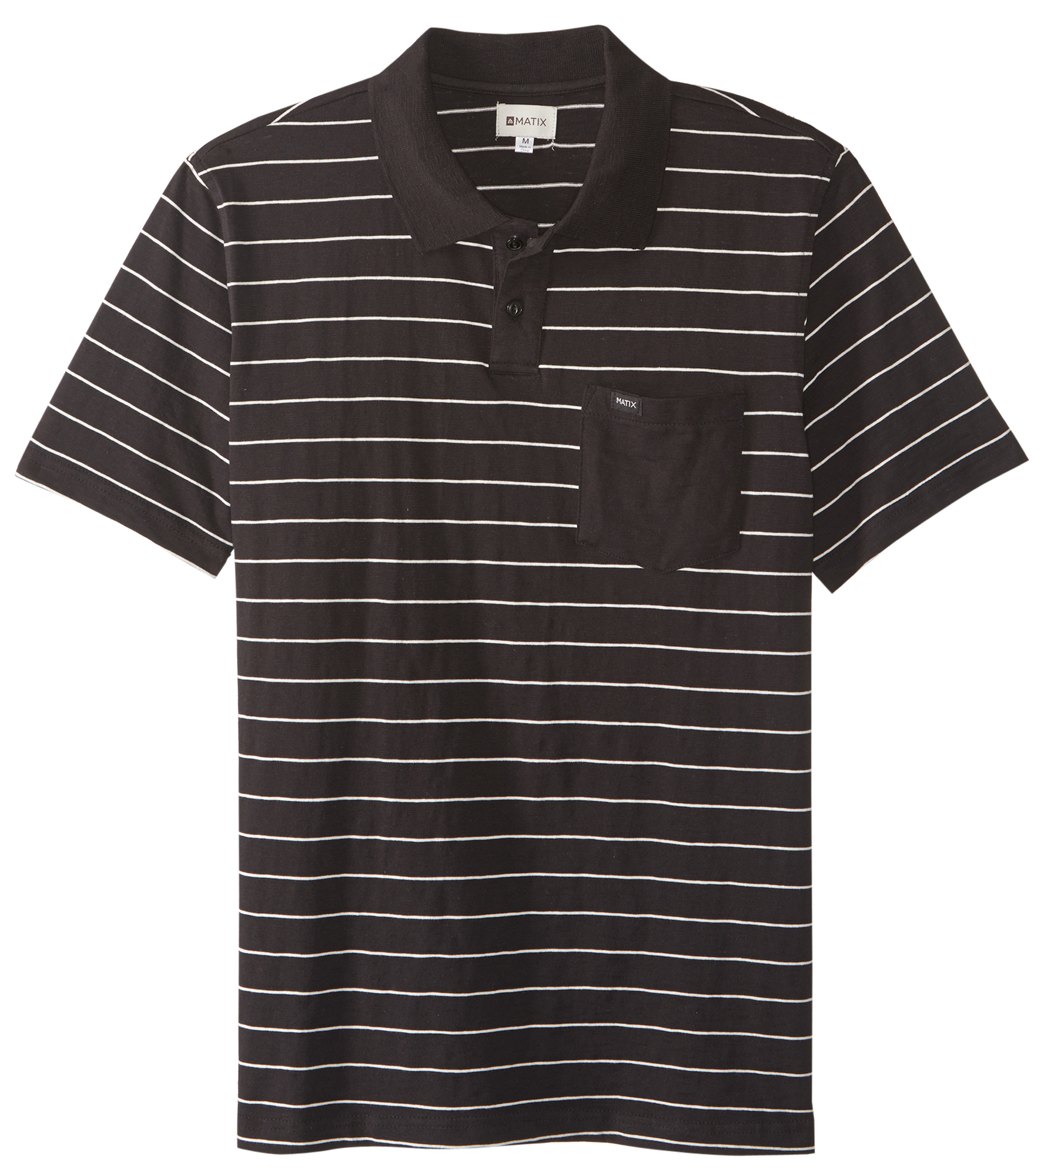 Matix Men's Easton Stripe Polo Shirt - Black Small Cotton - Swimoutlet.com